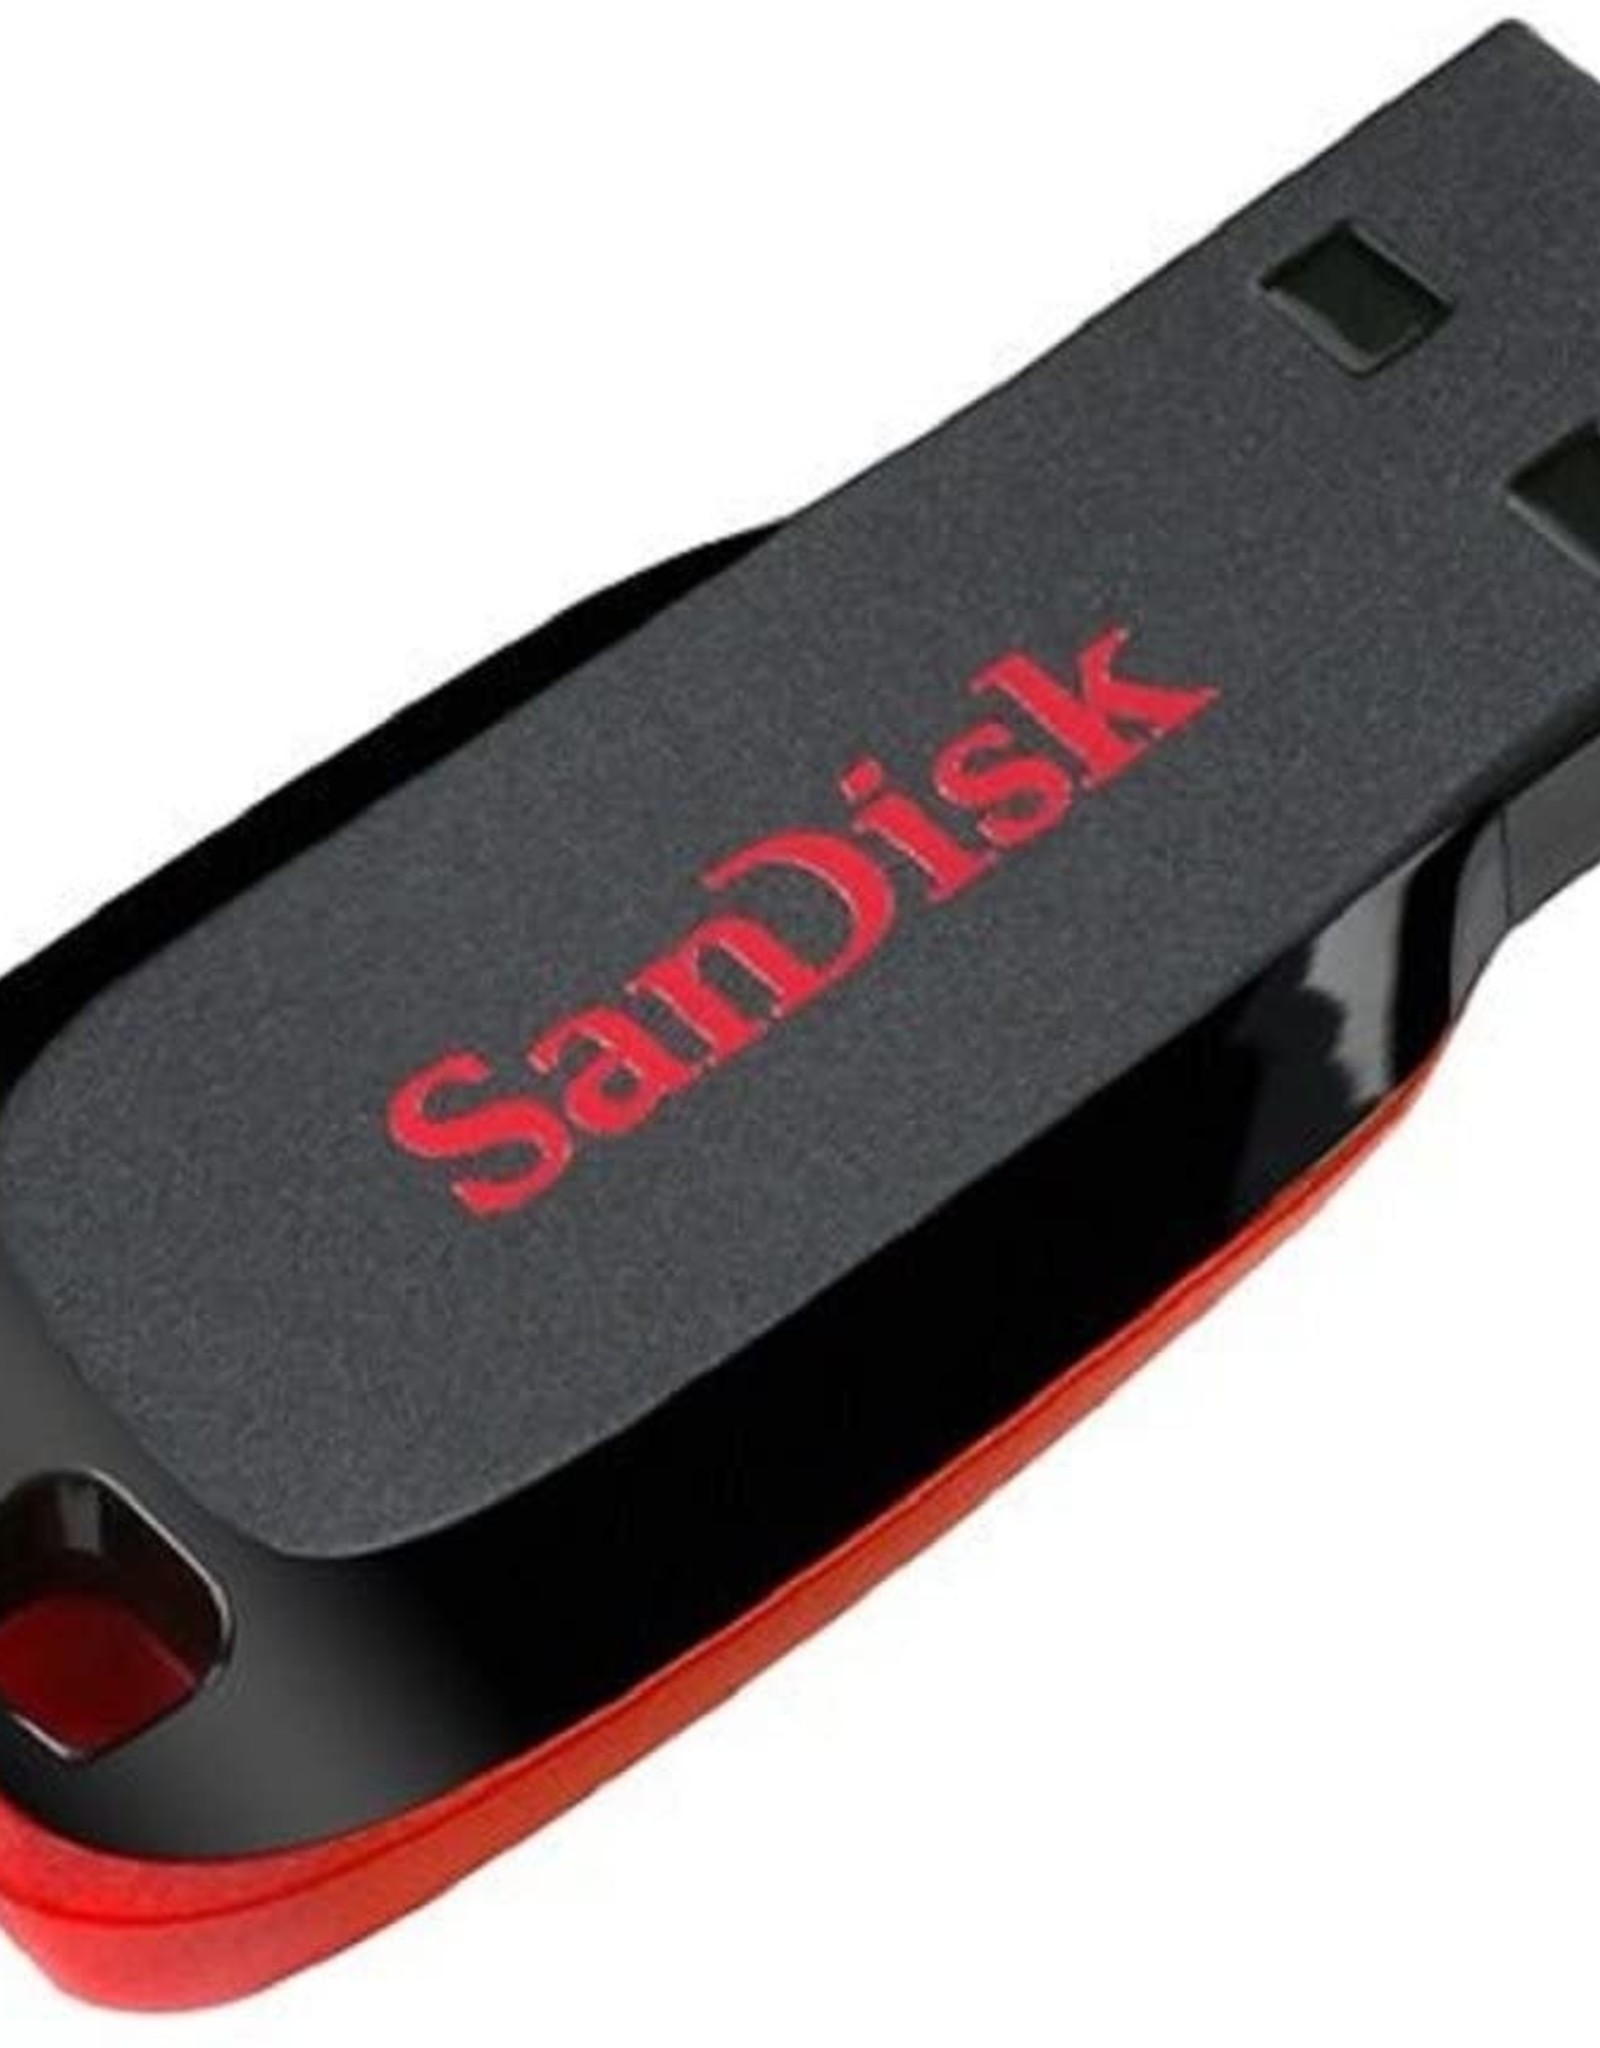 SanDisk 16GB Cruzer Blade USB 2.0 Drive